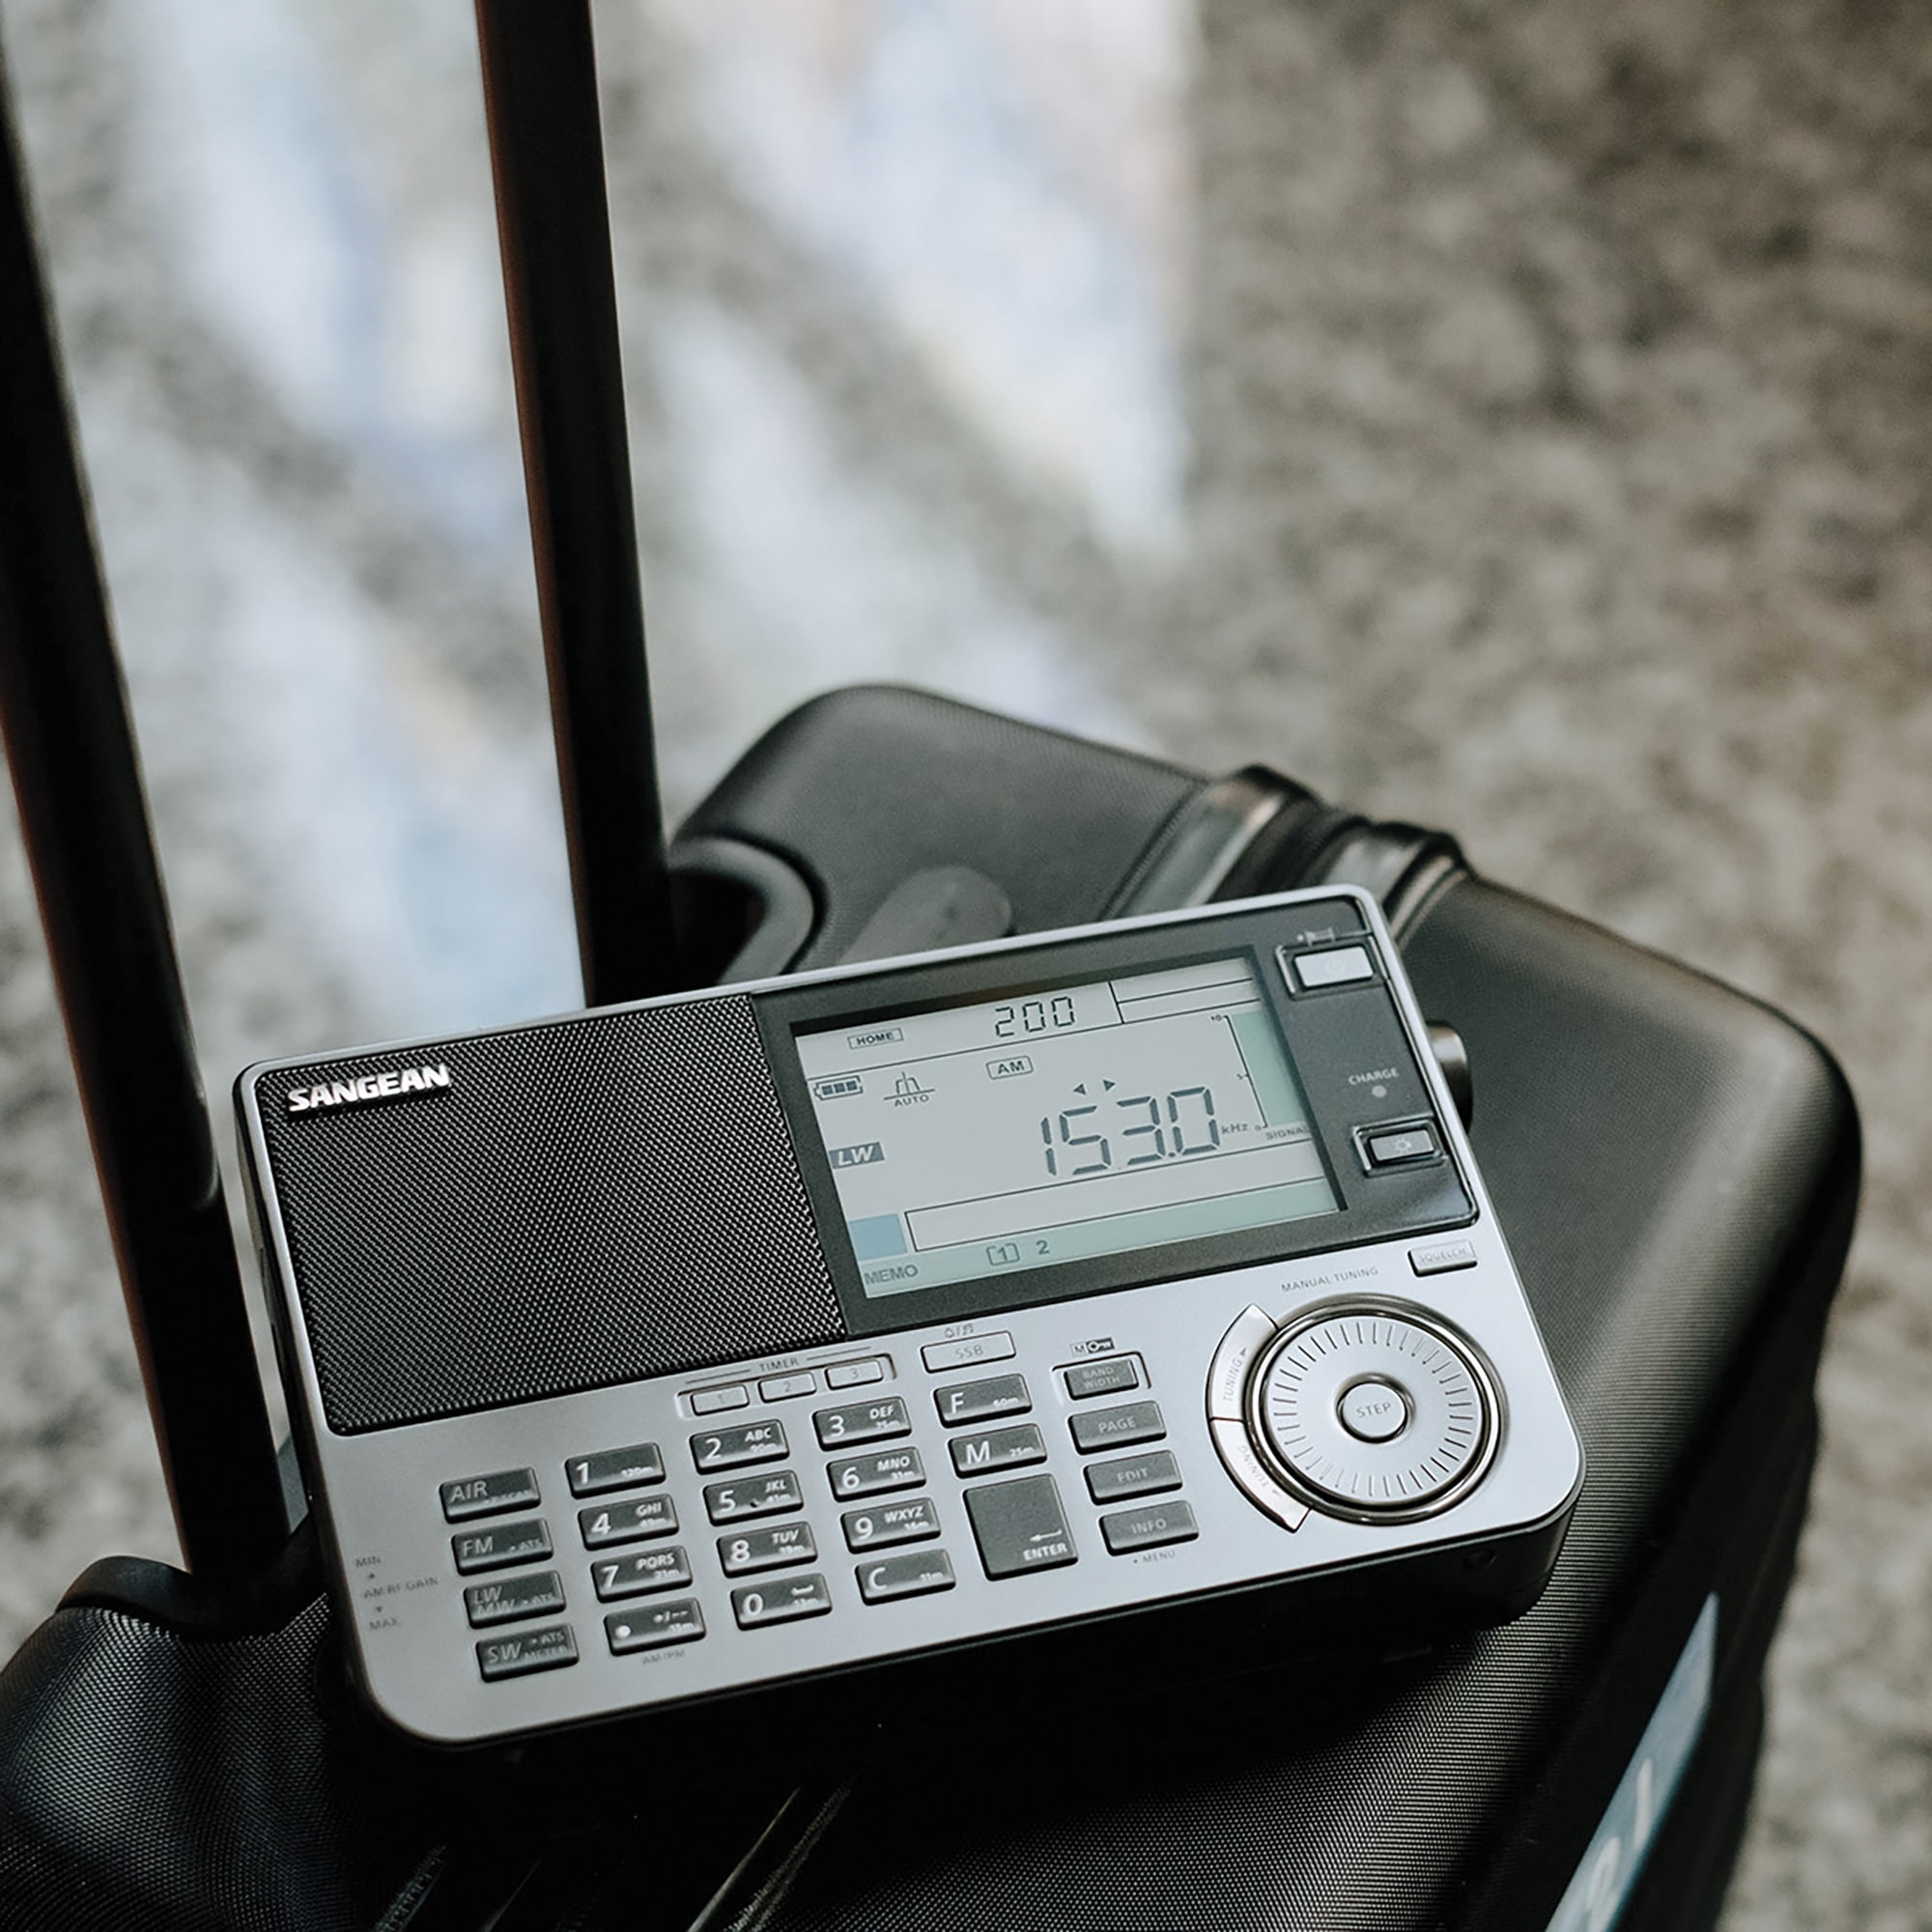 Sangean Portable AM/FM Radios, Gray, ATS-909X2